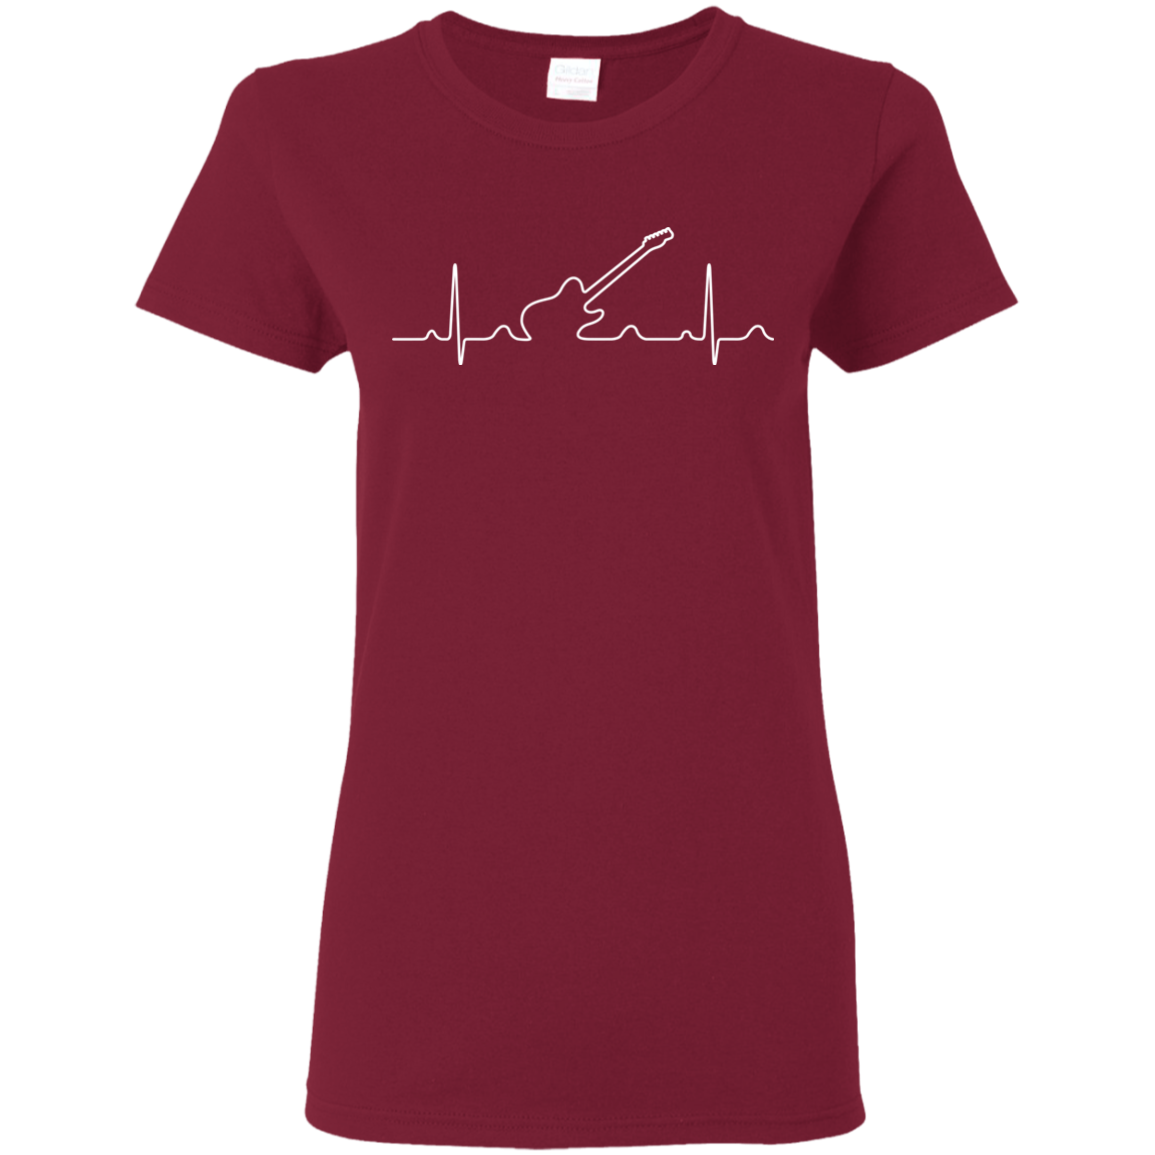 Heartbeat Electric Guitar 3 Ladies T-Shirt